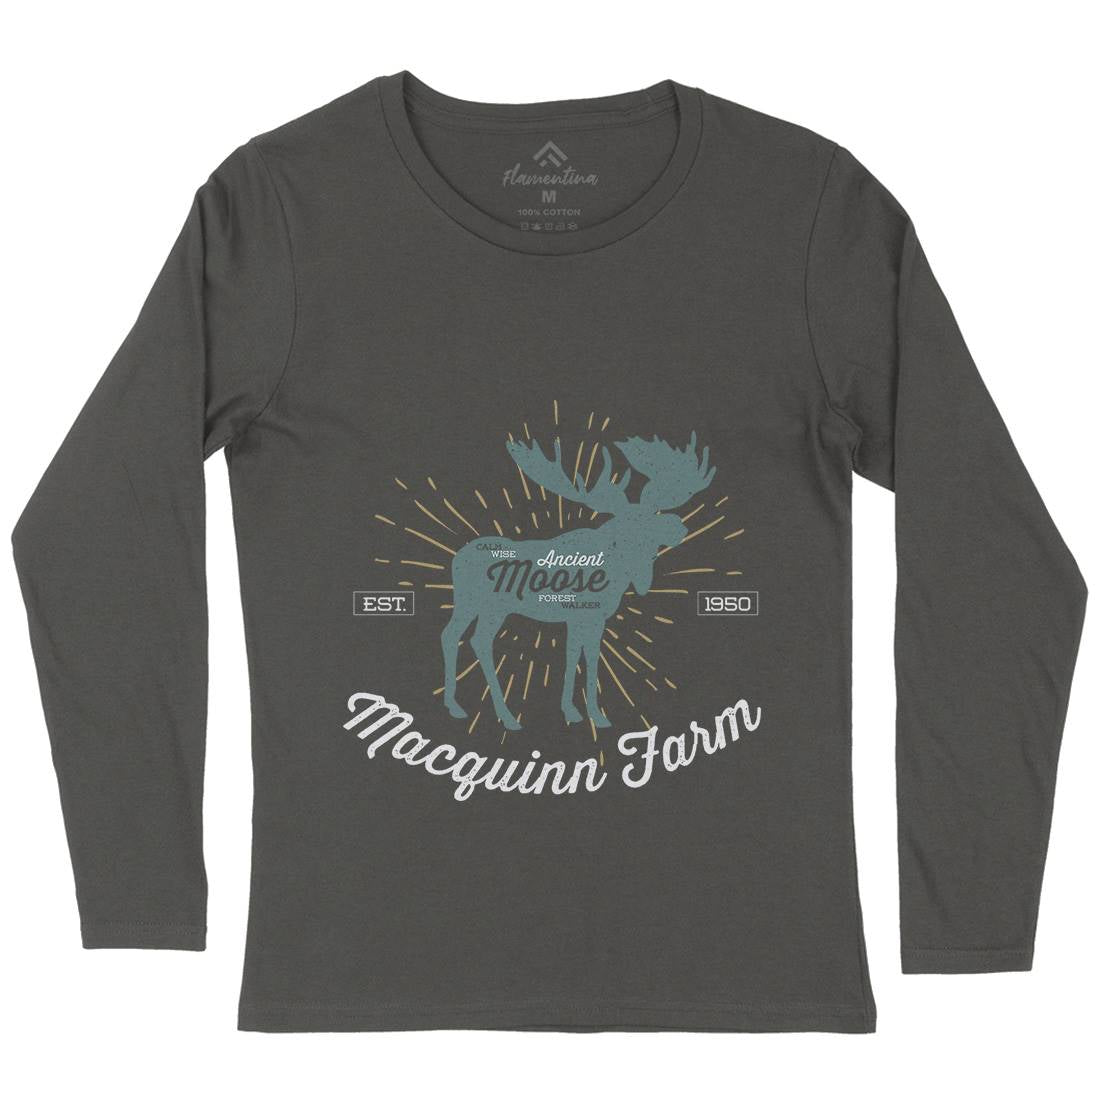 Moose Farm Womens Long Sleeve T-Shirt Animals B740